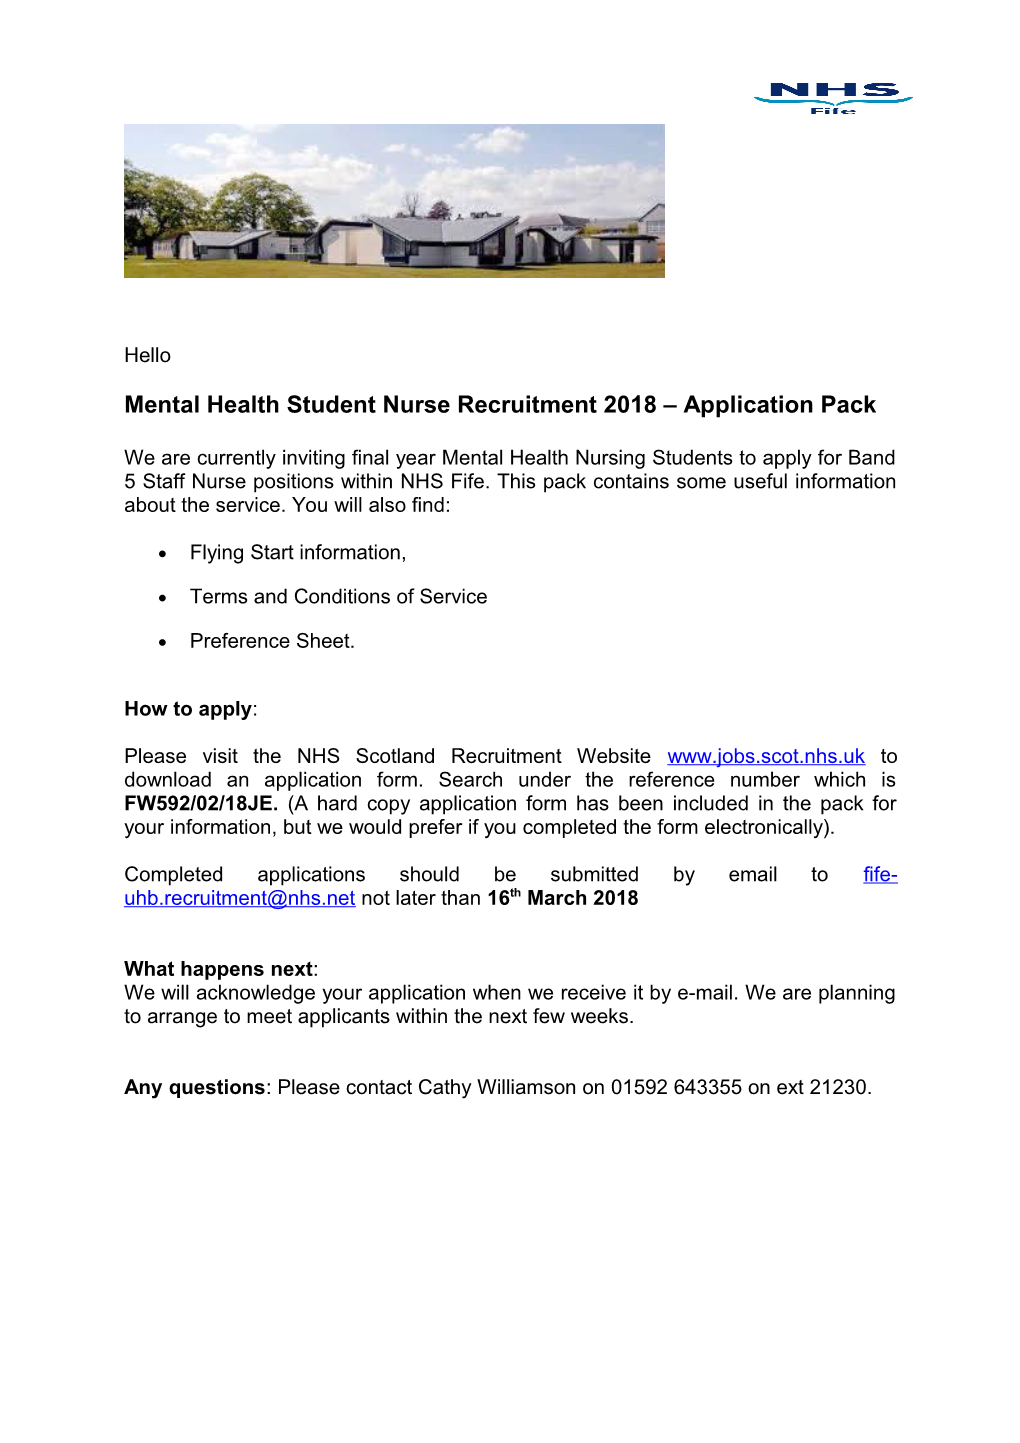 Mental Health Student Nurse Recruitment 2018 Application Pack